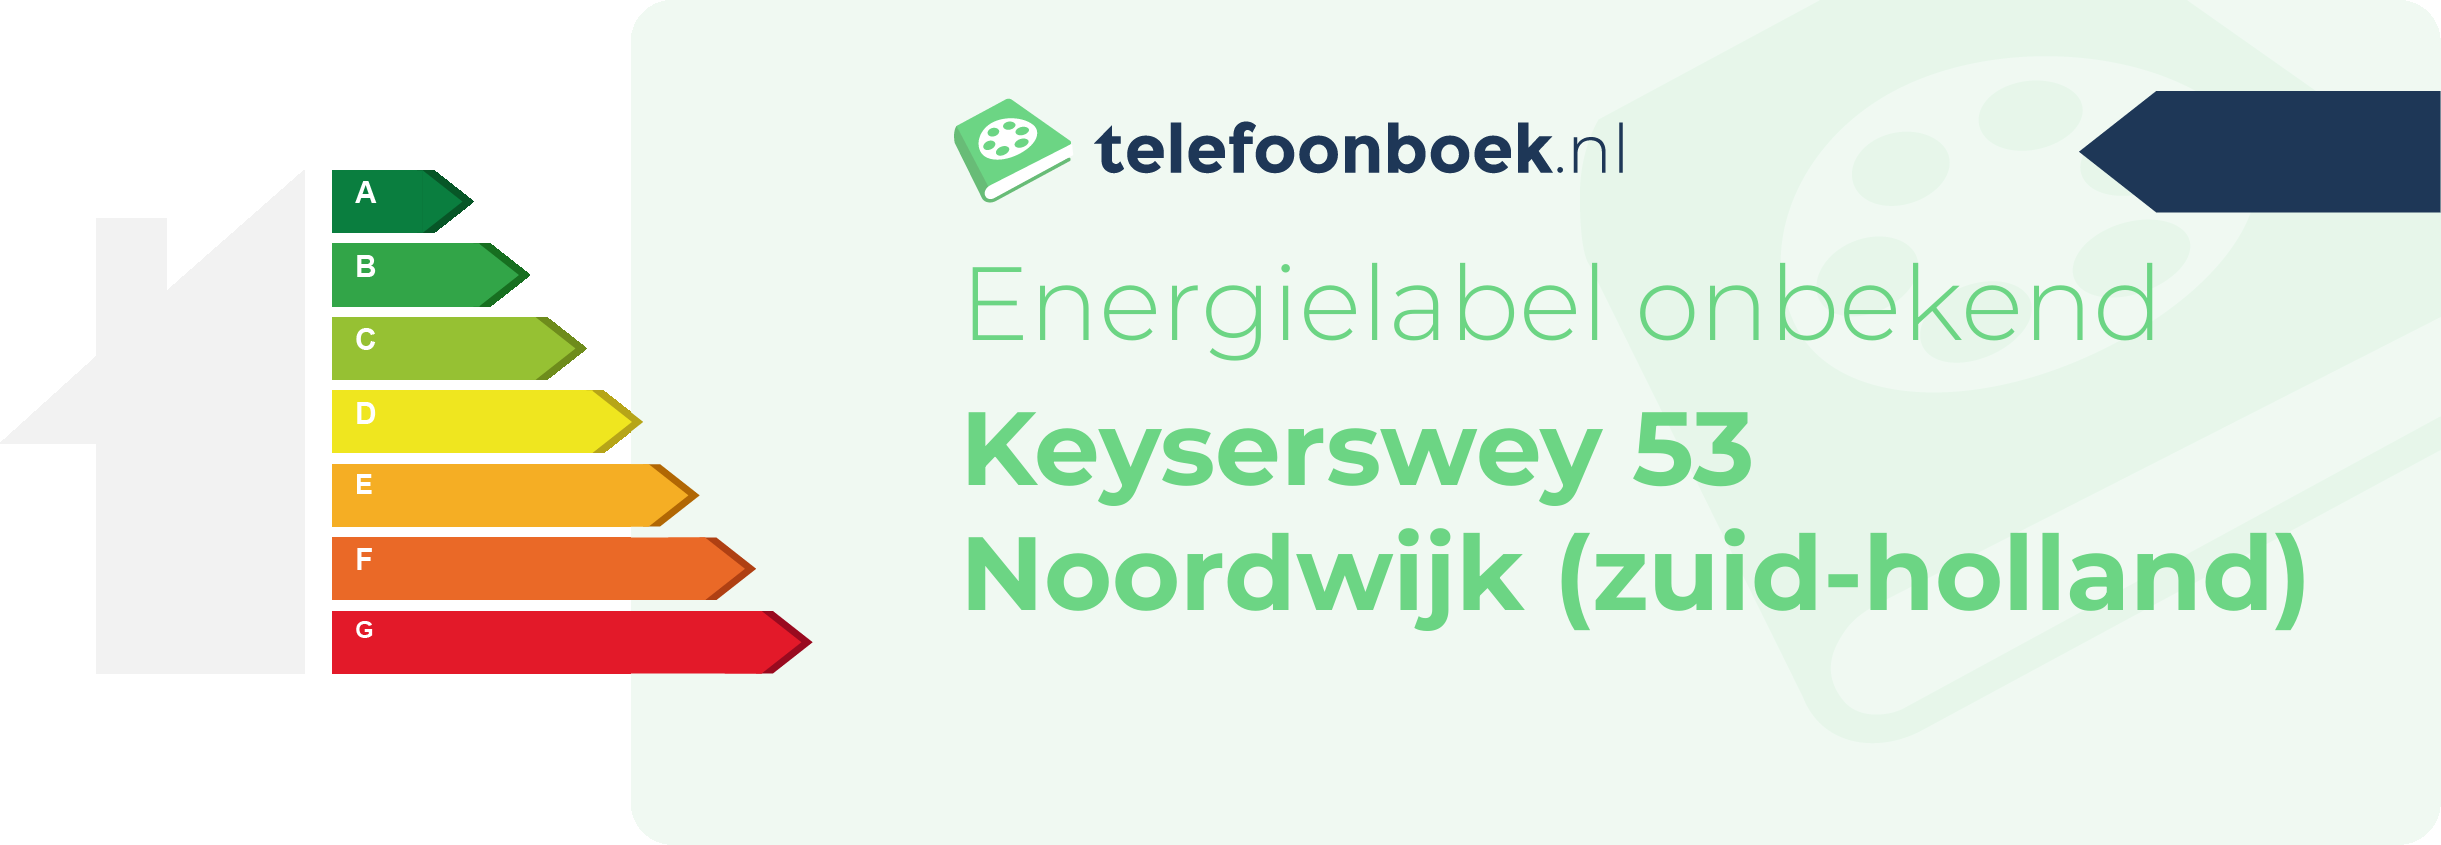 Energielabel Keyserswey 53 Noordwijk (Zuid-Holland)